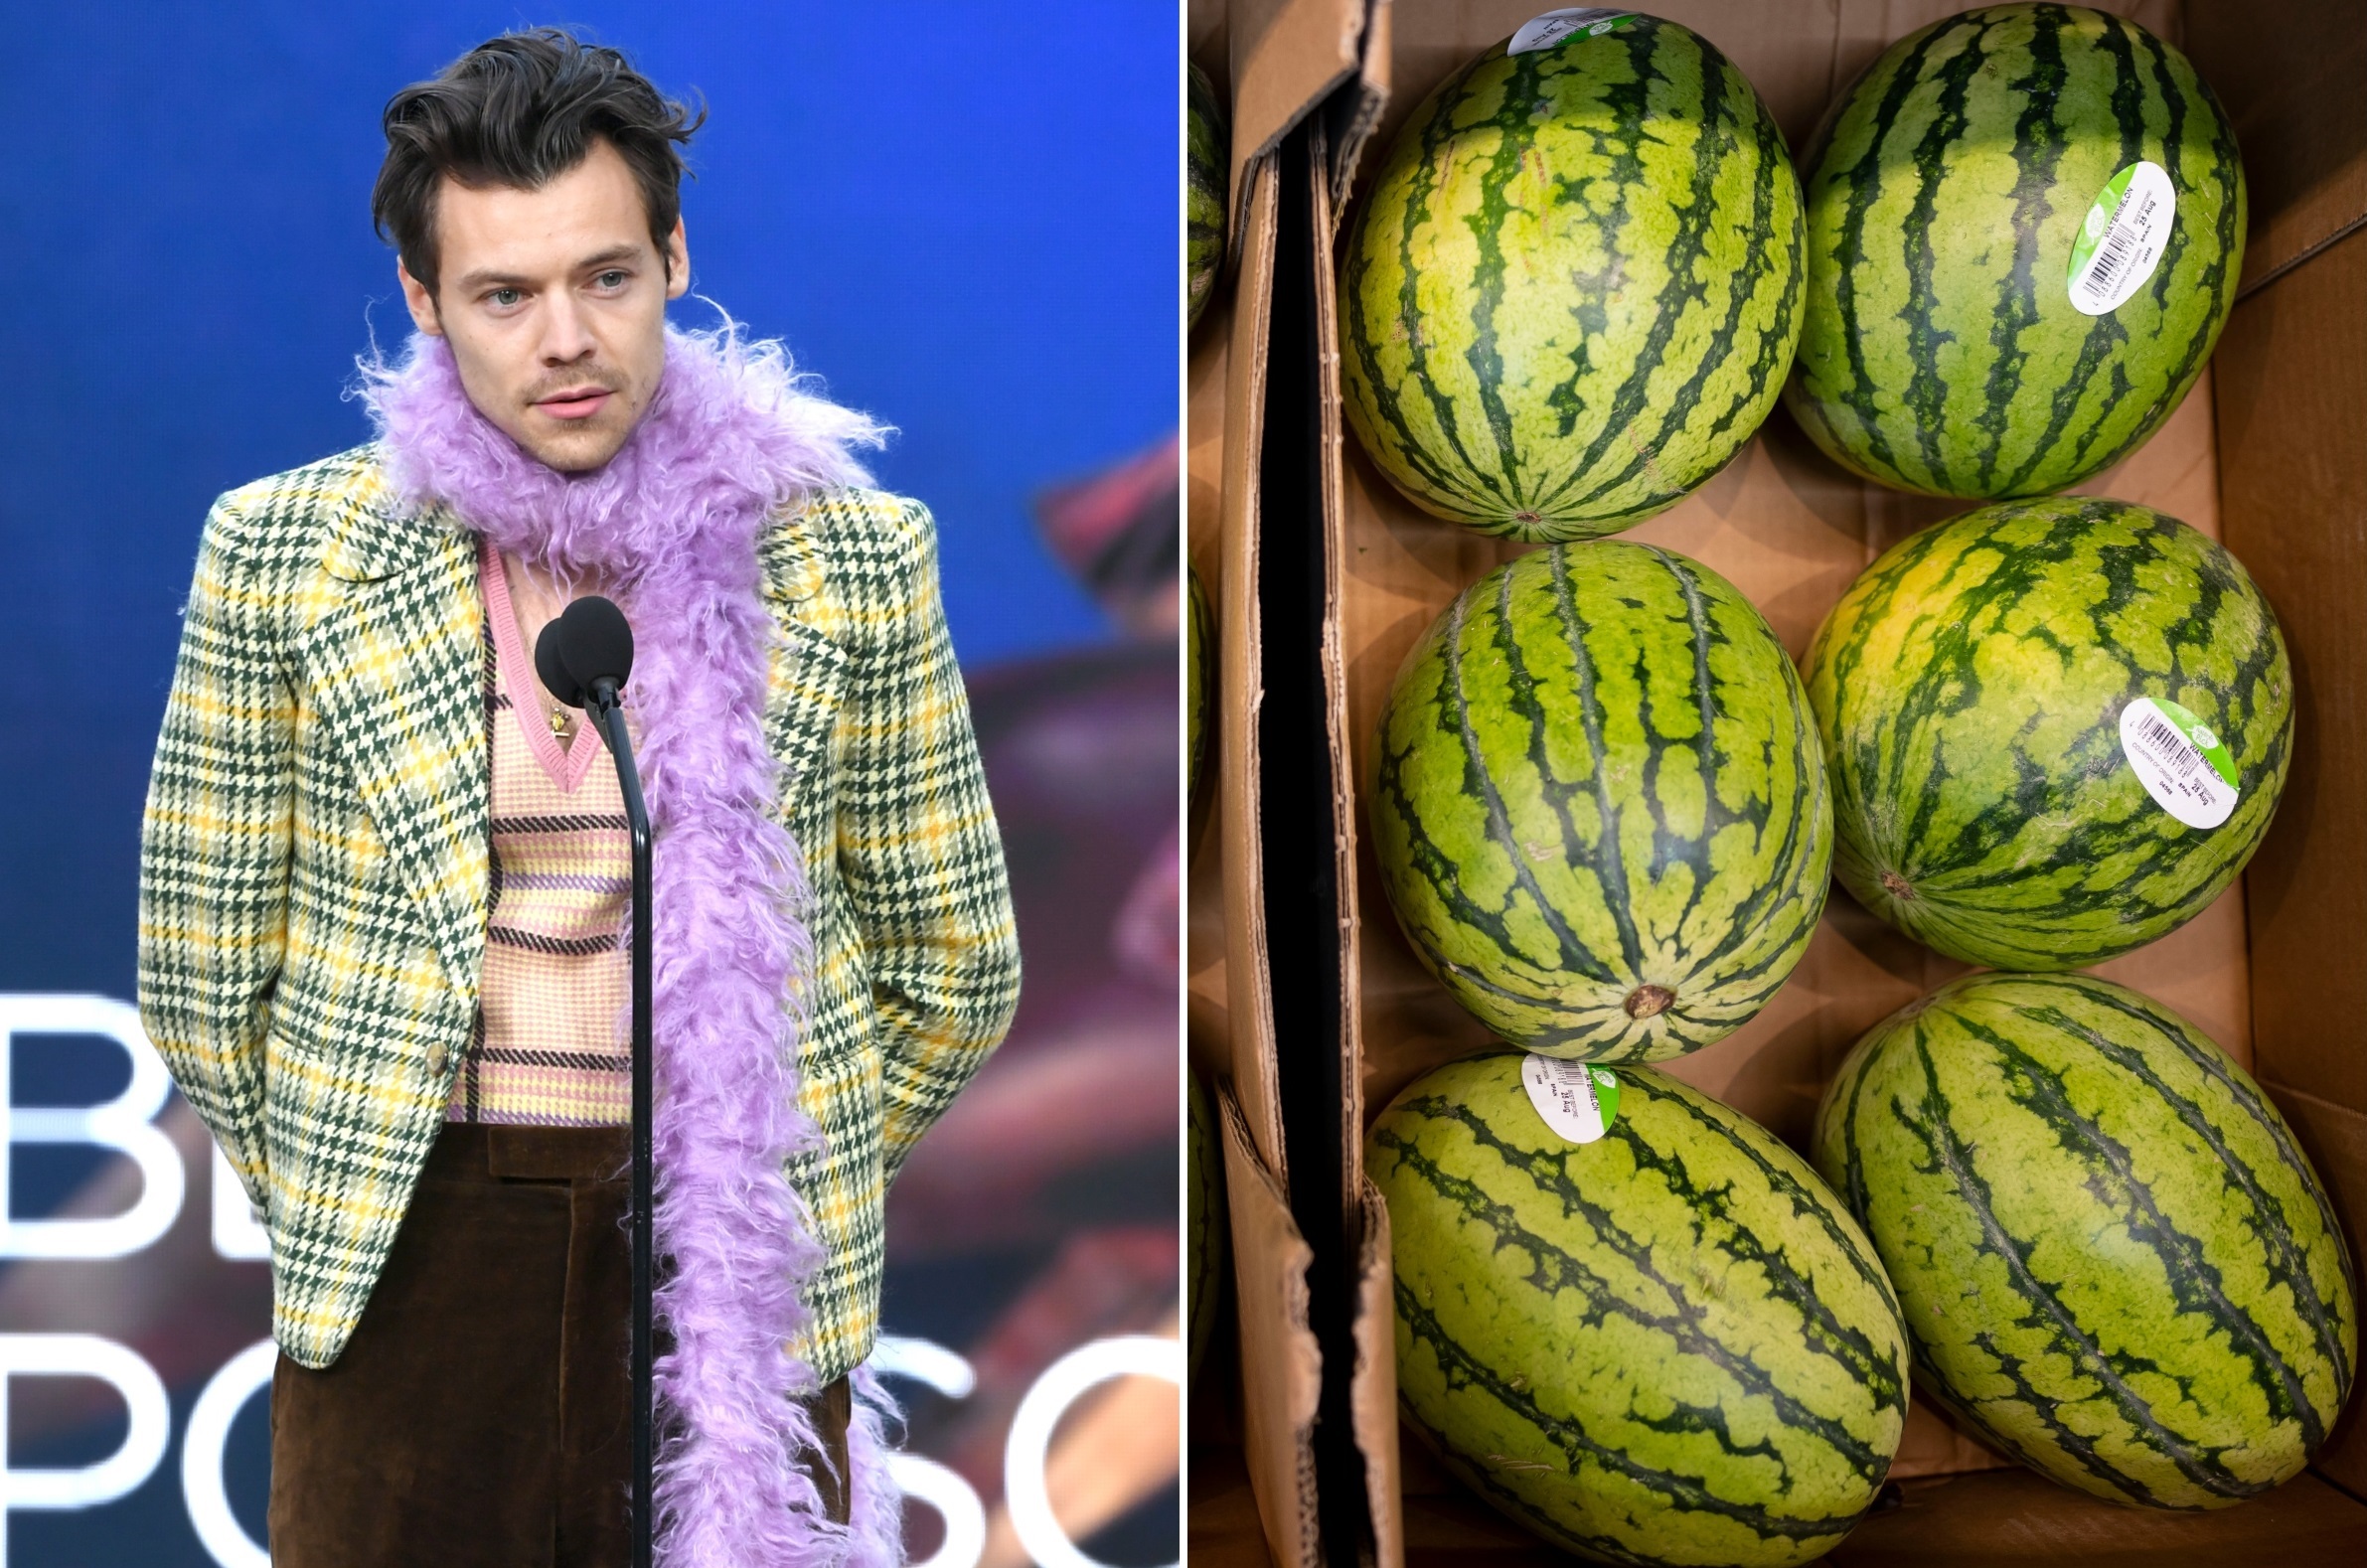 Harry Styles Confirms NSFW Meaning Behind 'Watermelon Sugar' Lyrics